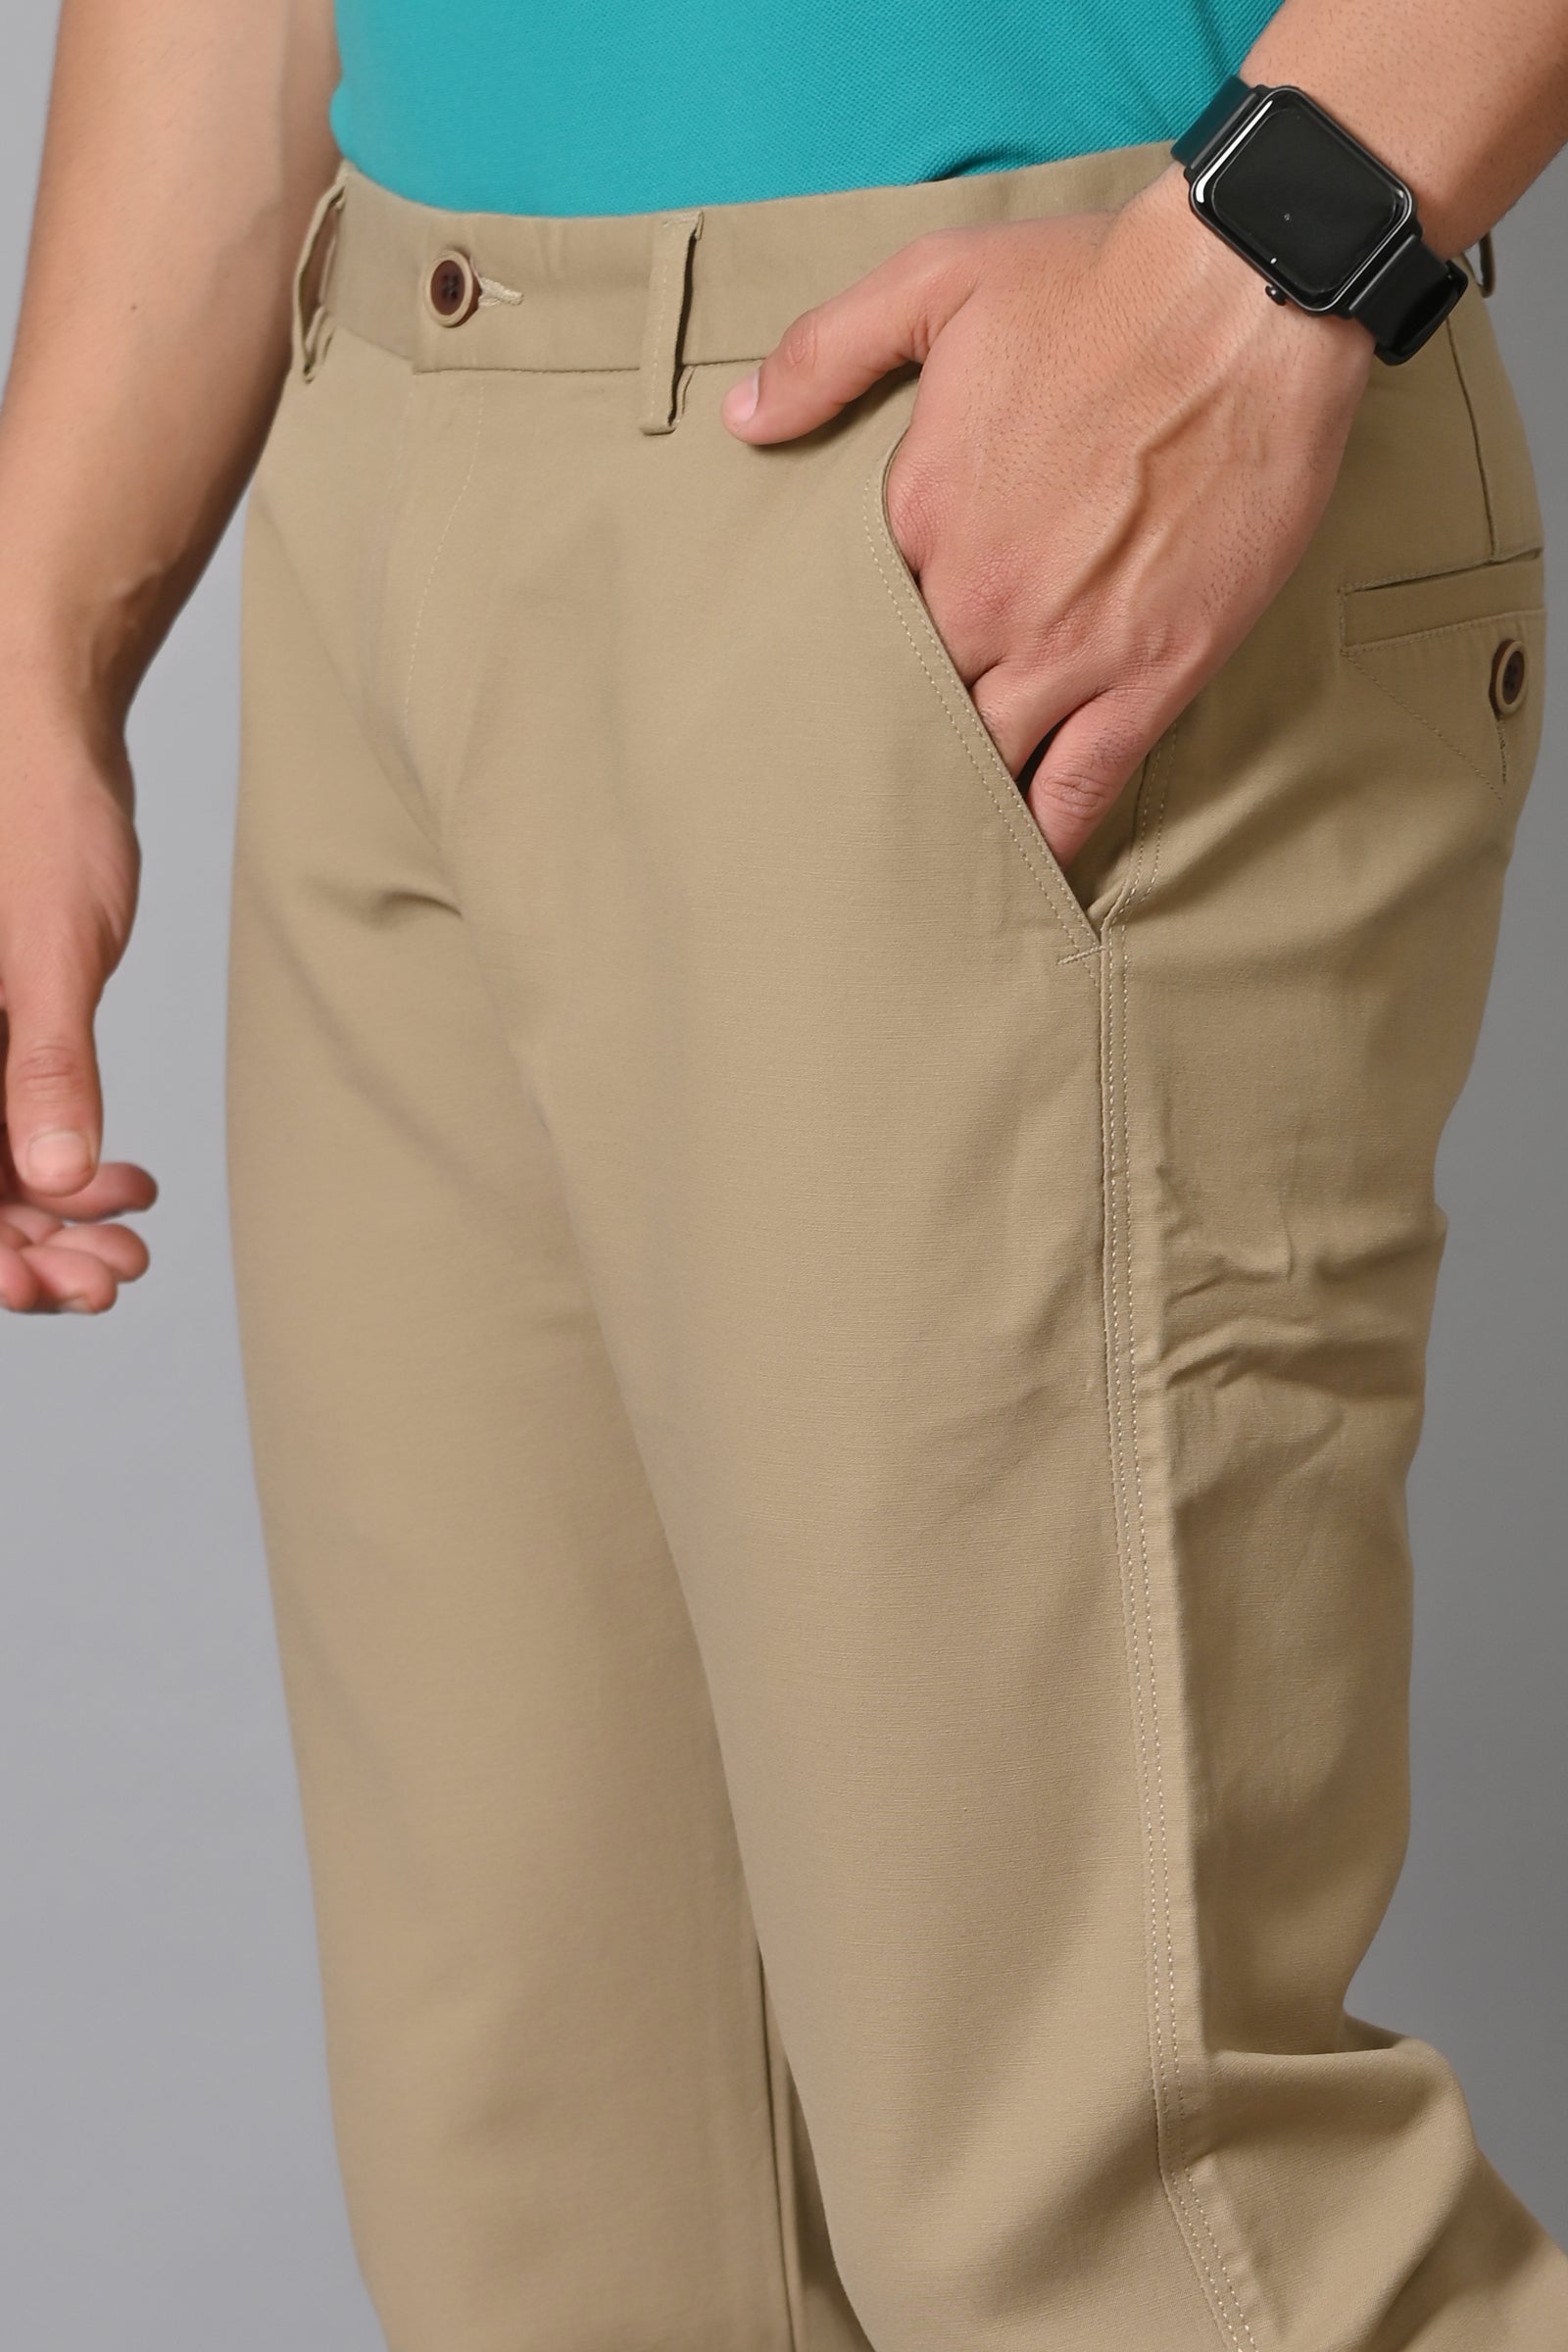 Jaguro Men's Bottomwear Trouser Chinos Light Grey